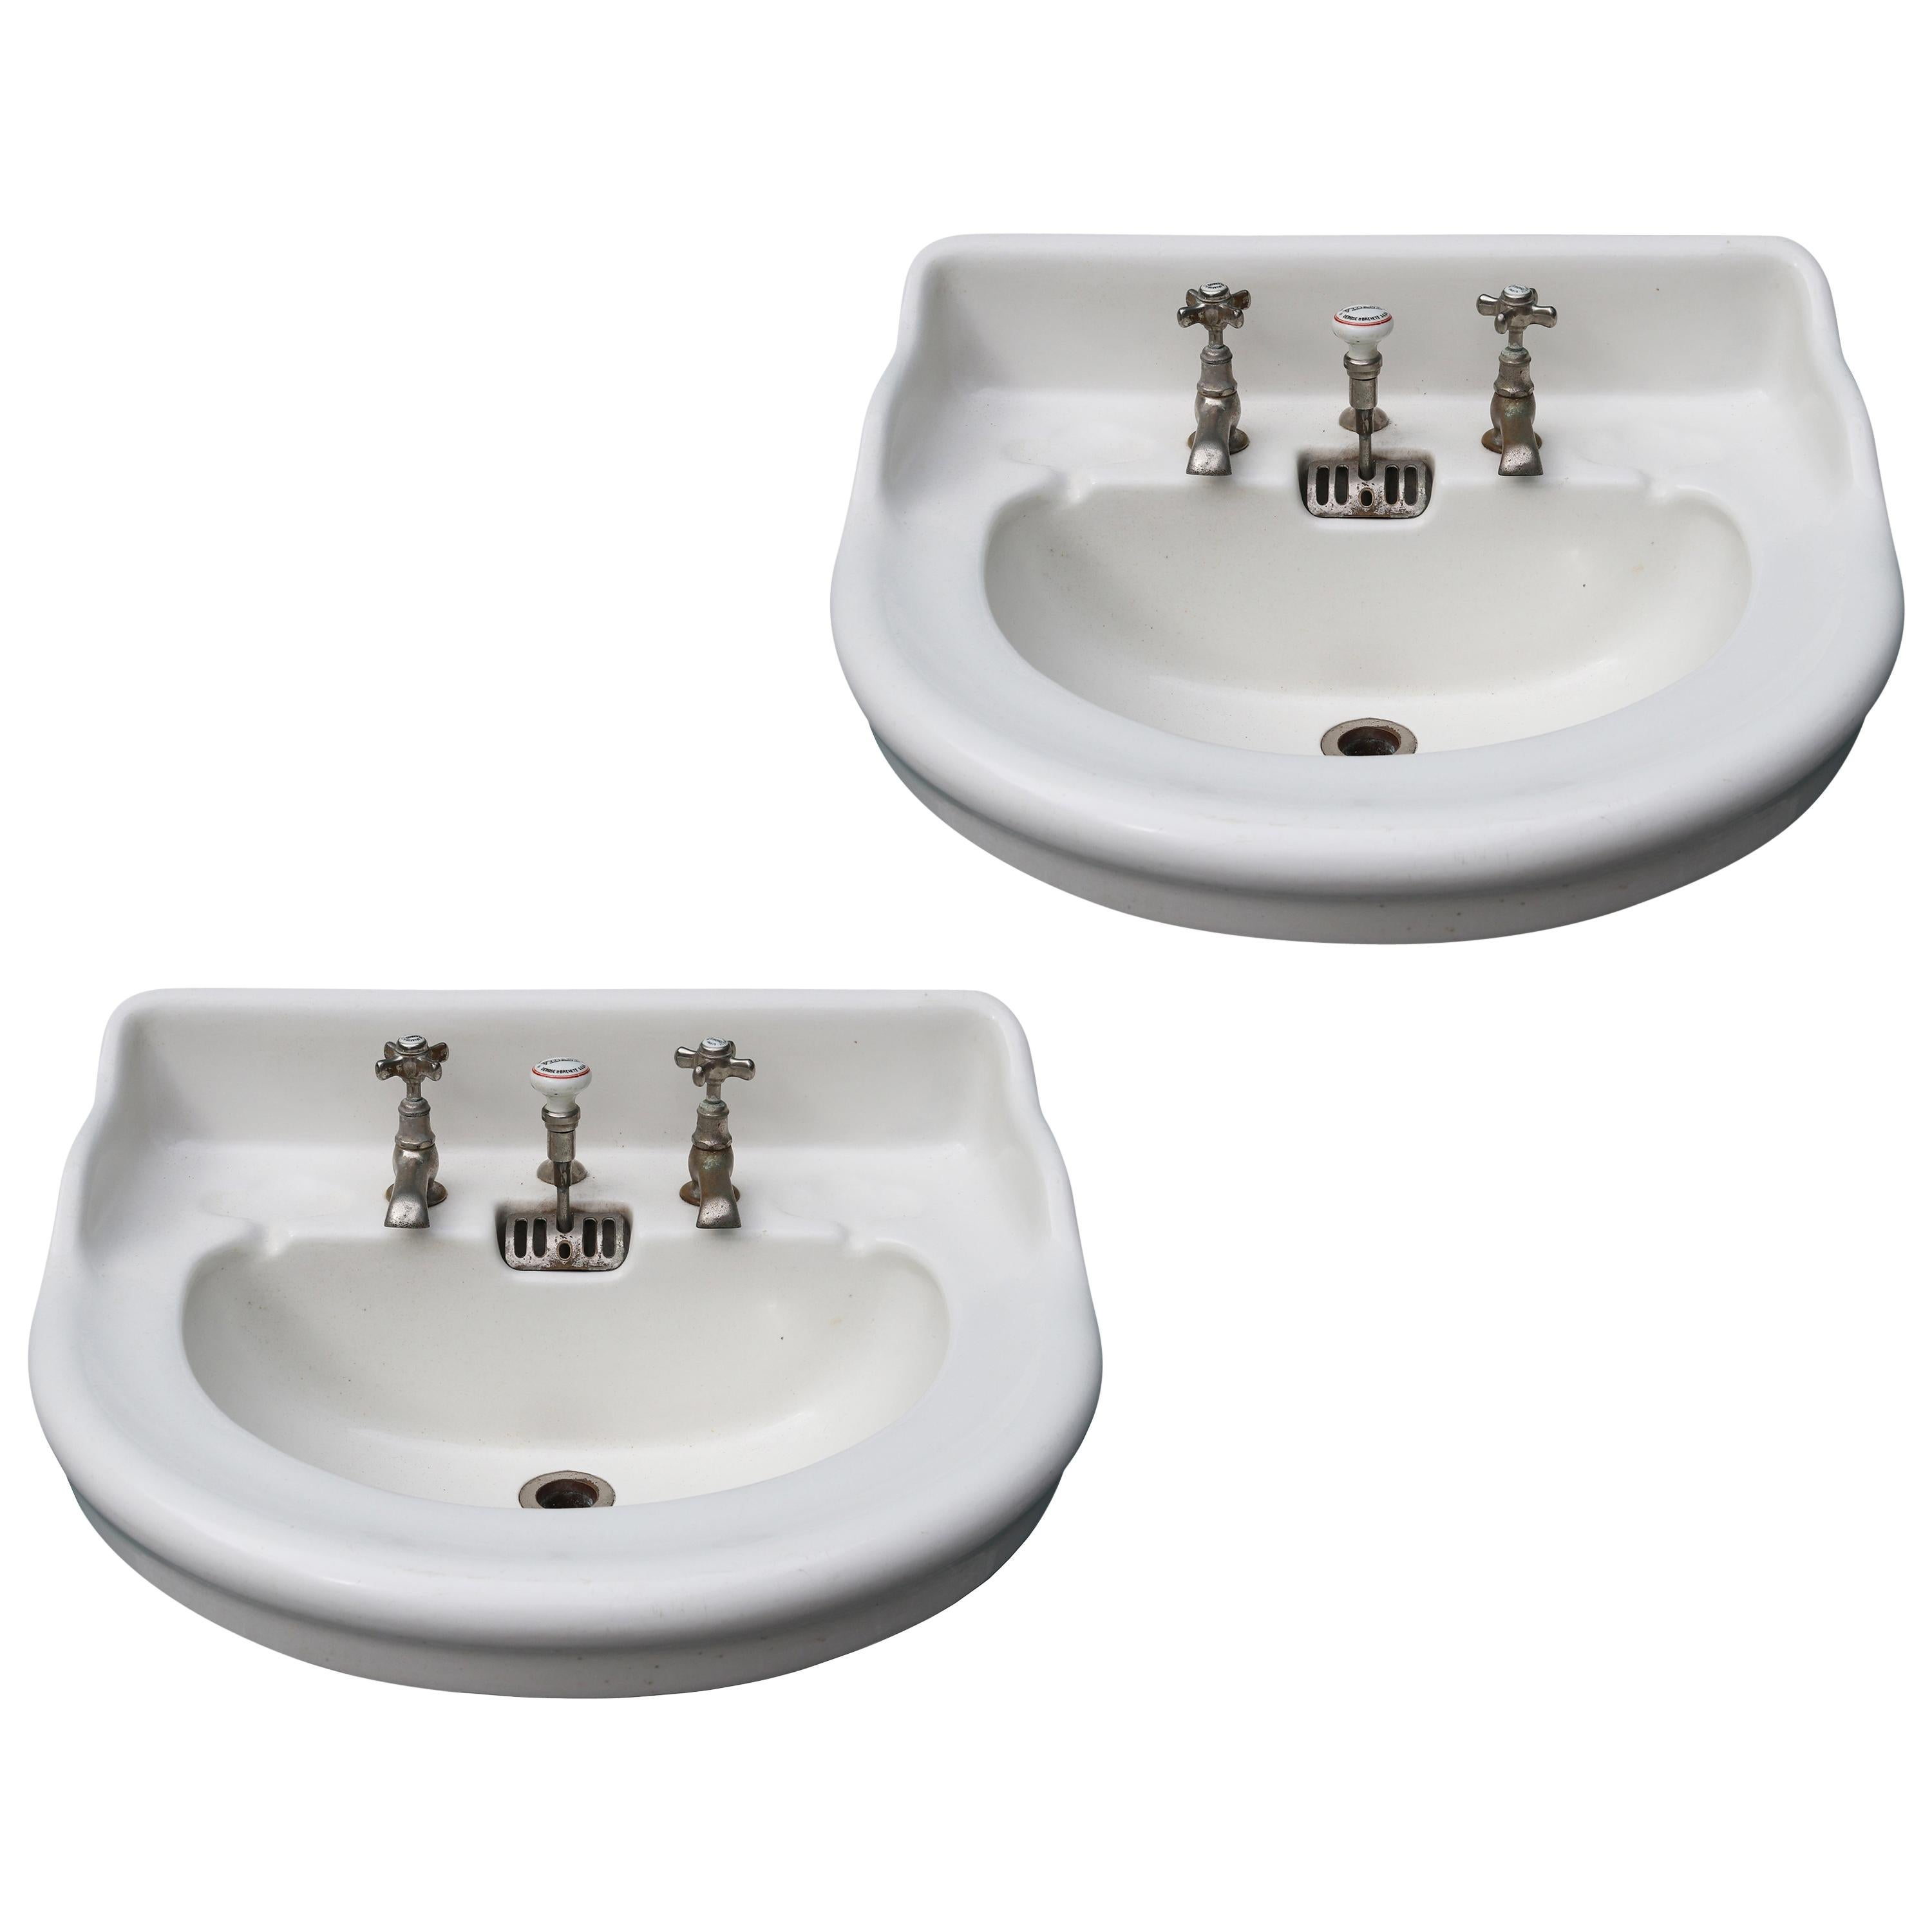 Two Reclaimed Jacob Delafon Sinks or Wash Basins